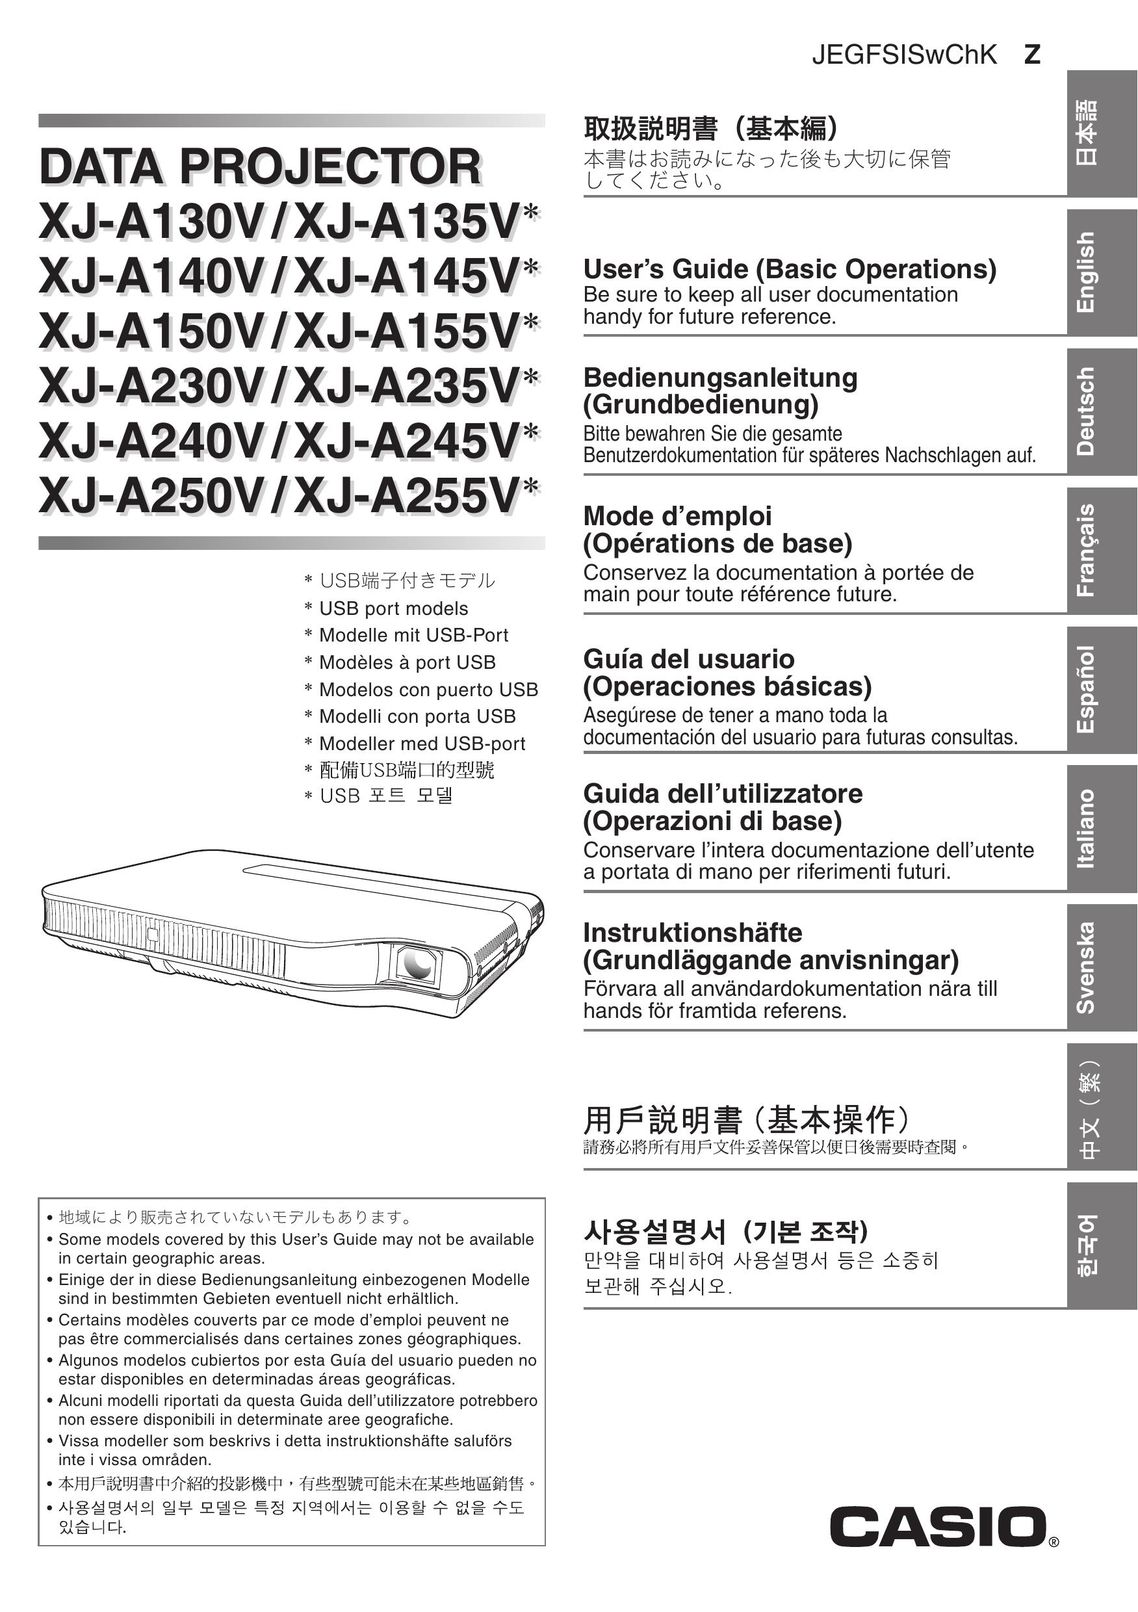 Casio XJ-A140V/XJ-A145V* Projector User Manual